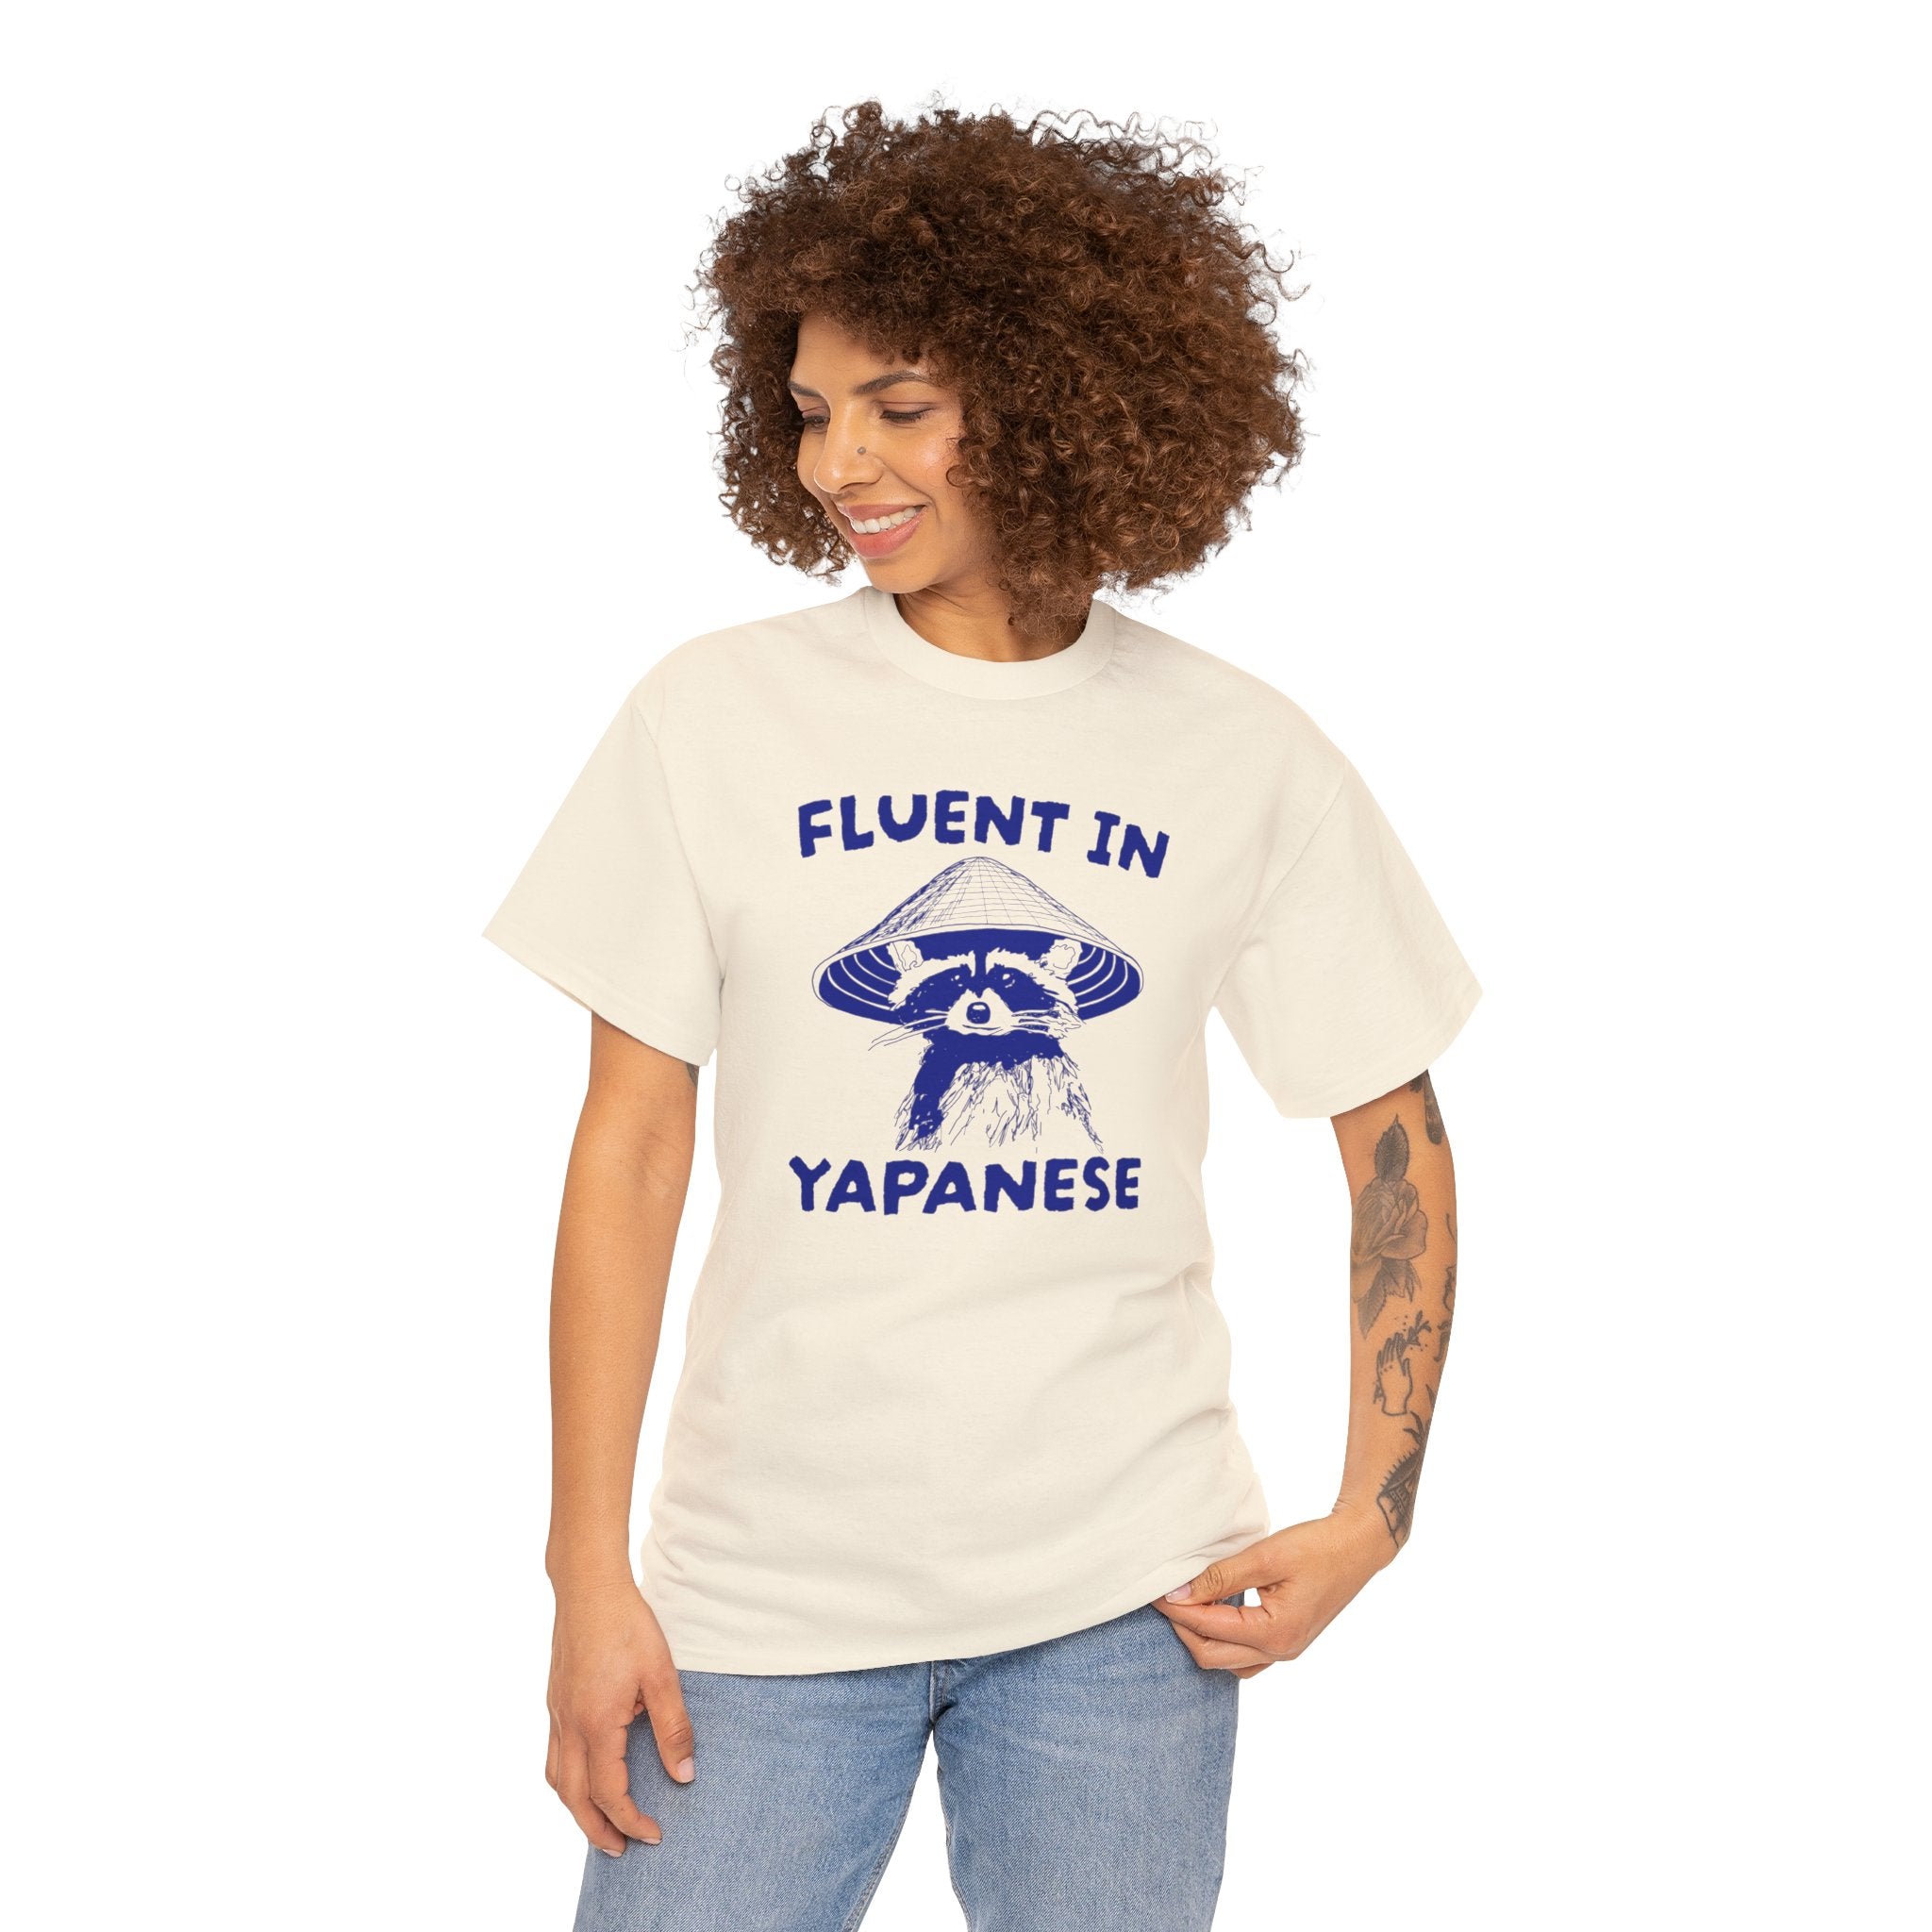 Fluent in Yapanese Shirt